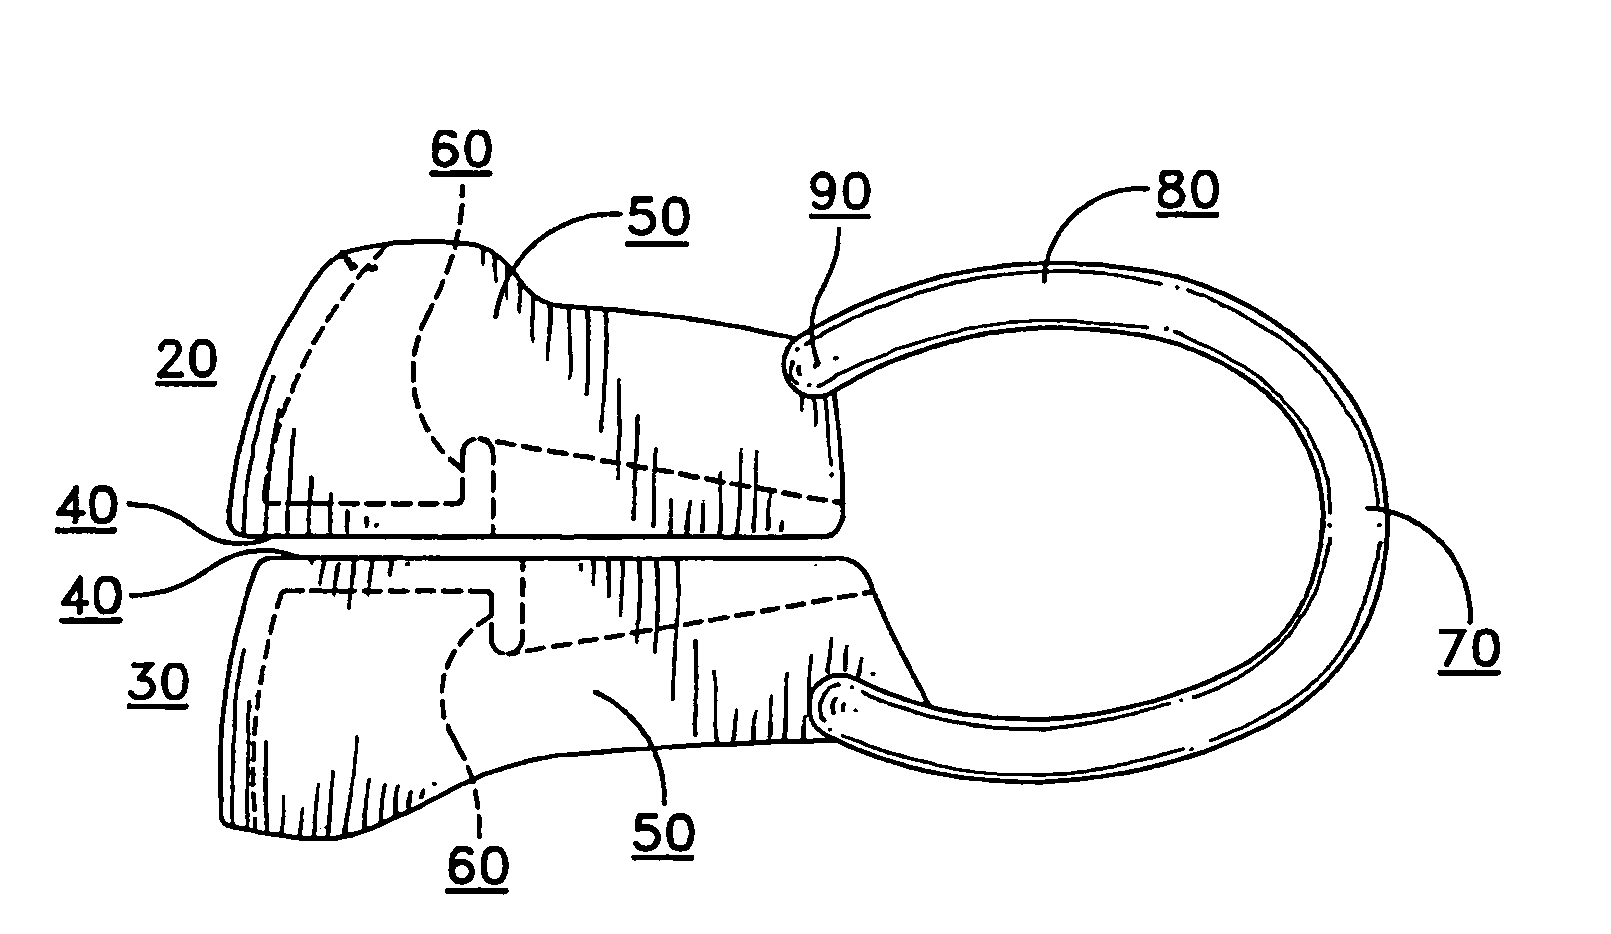 Anterior sextant dental bite tray apparatus